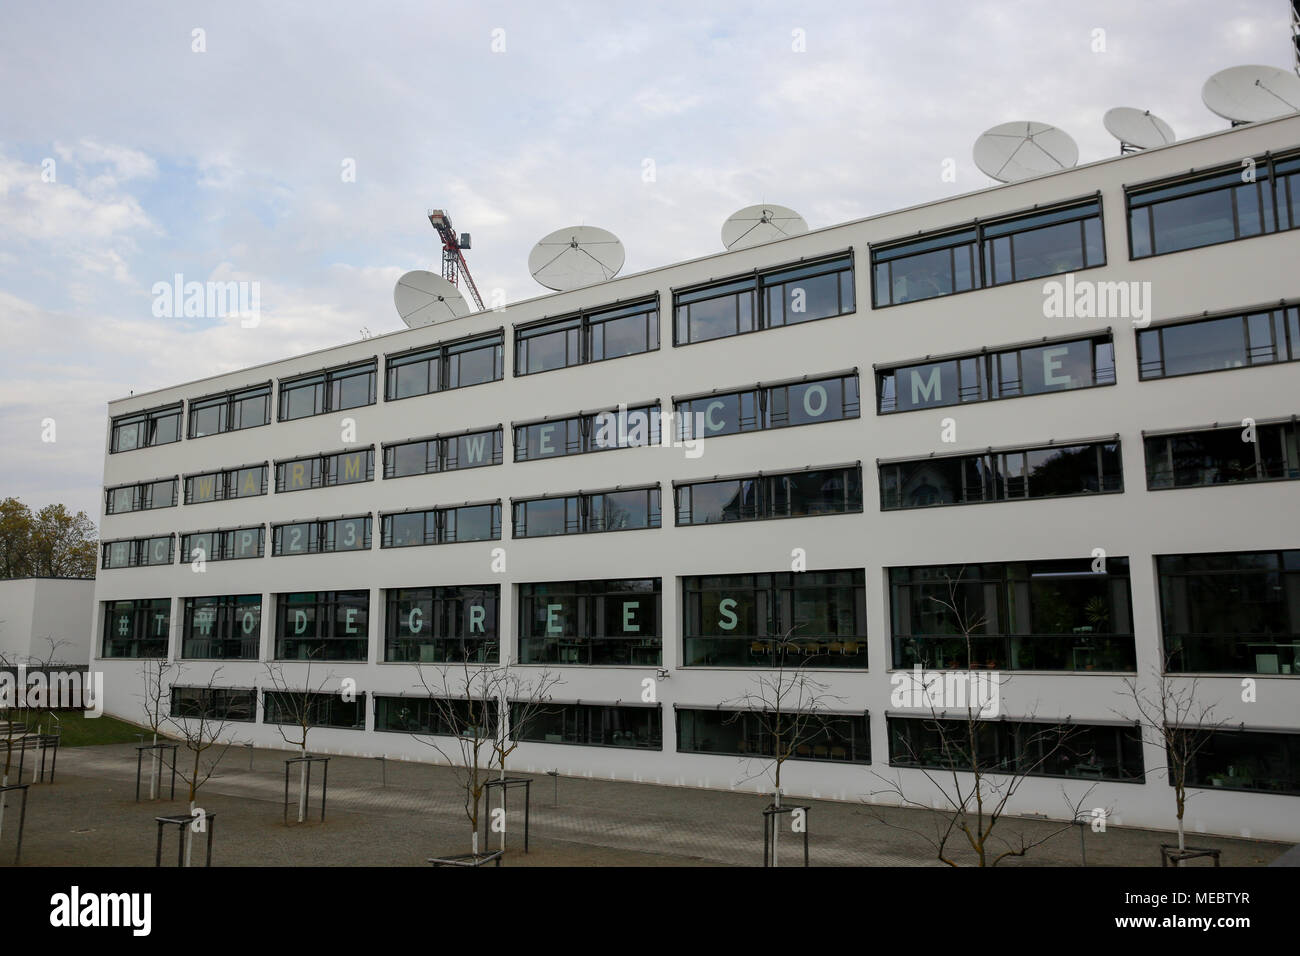 Deutsche Welle headquarters, Bonn, North Rhine Westphalia, Germany. Stock Photo